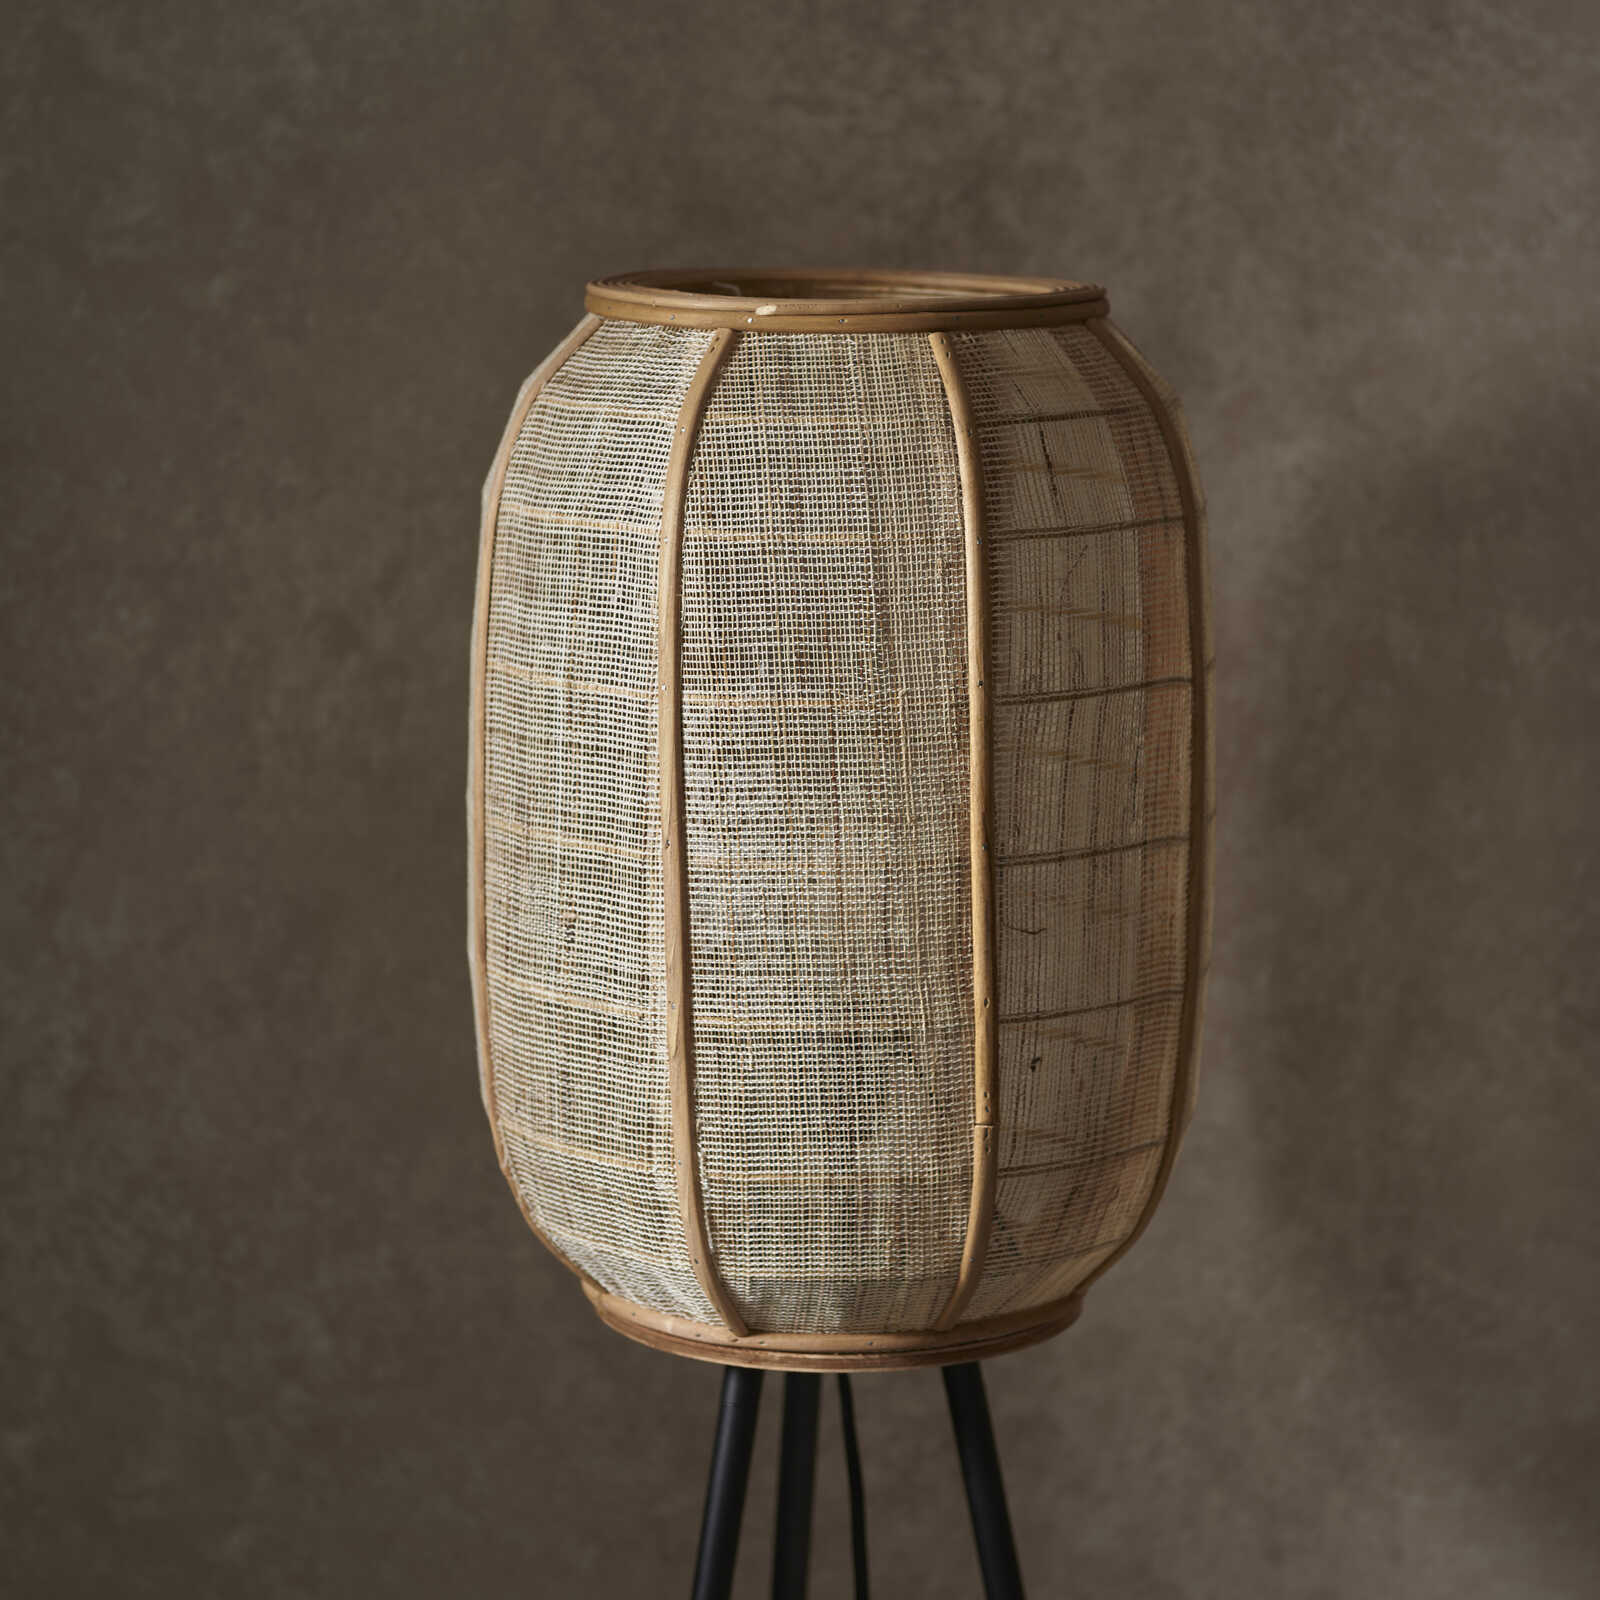             Floor lamp made of textile - Paula 6 - Brown
        